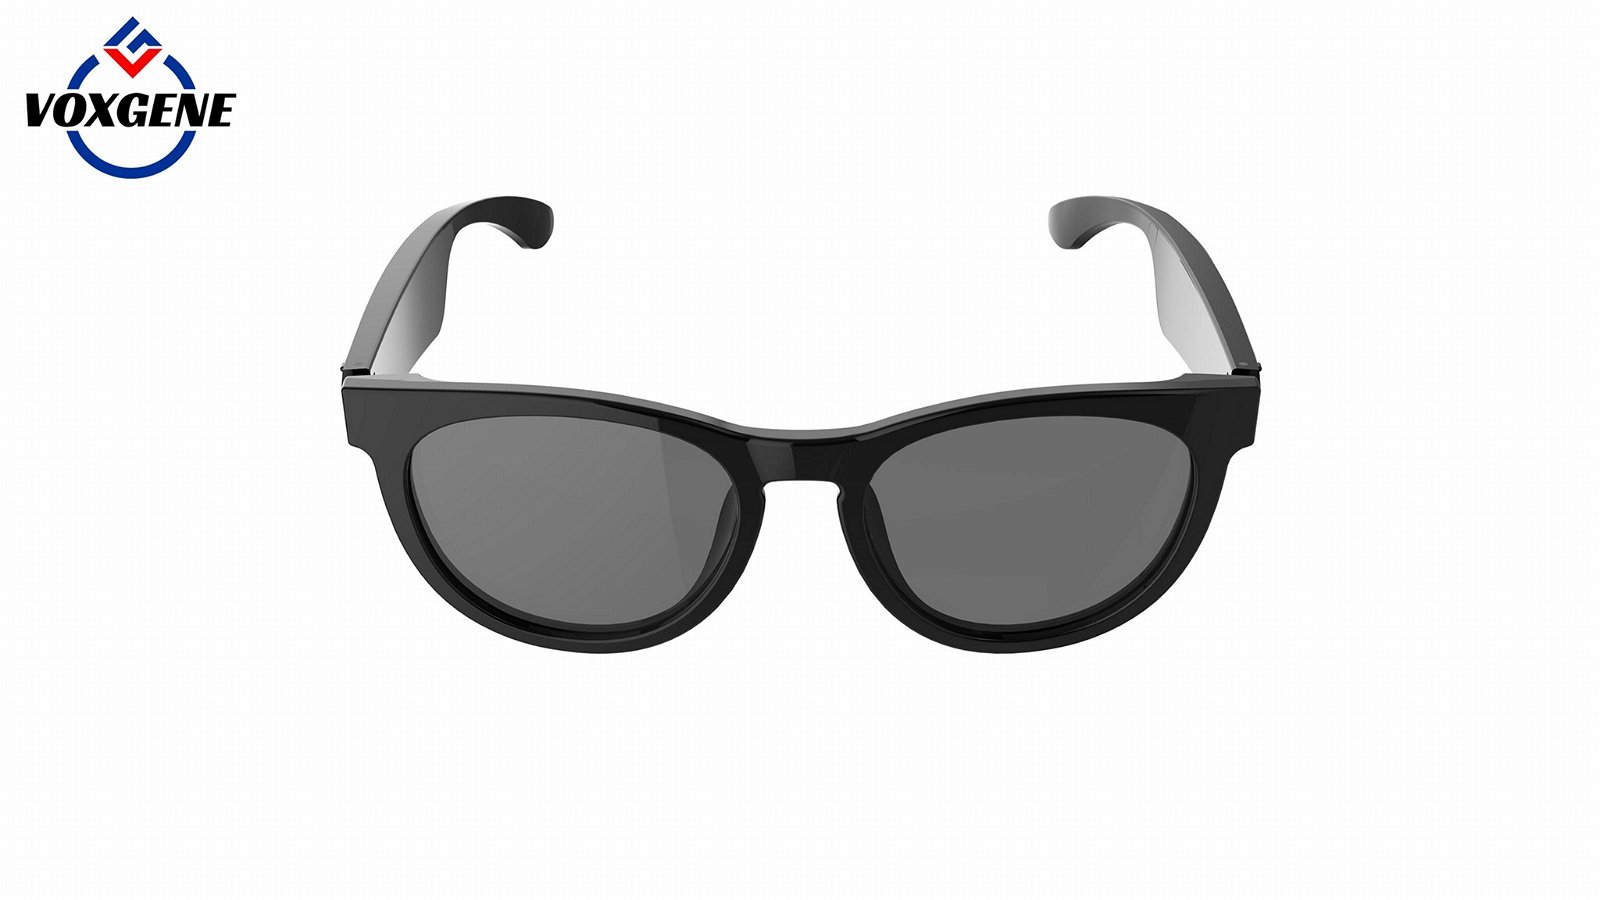  Wireless bluetooth audio glasses,Intelligent glasses, 4